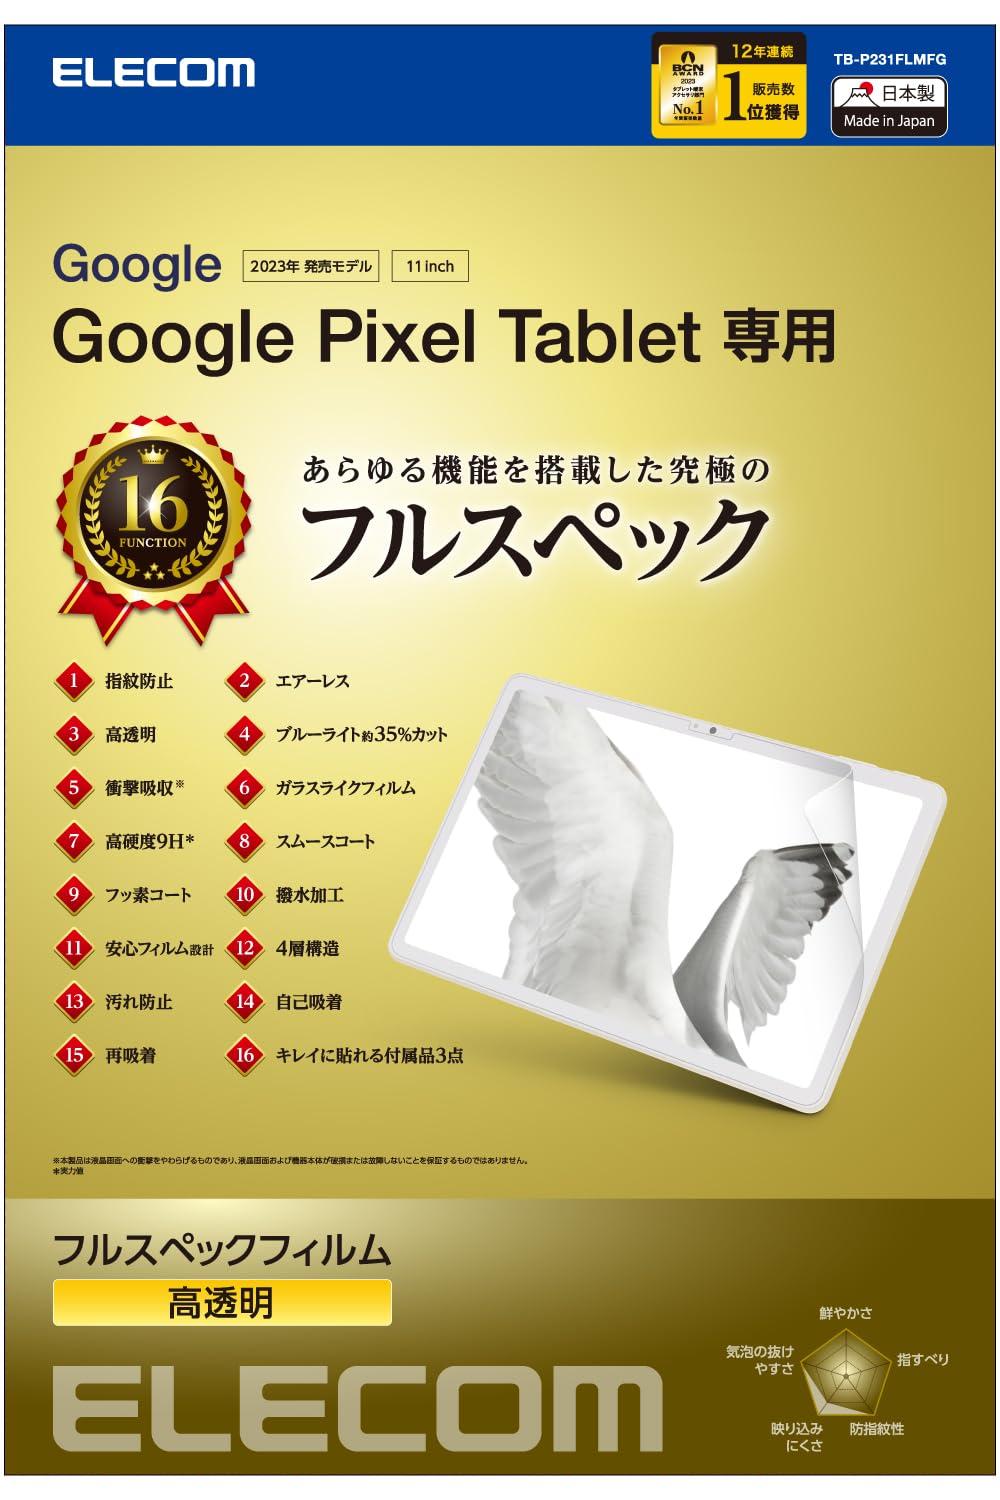 Google Pixel Tablet/tXybNtB/Ռz(TB-P231FLMFG) ELECOM GR